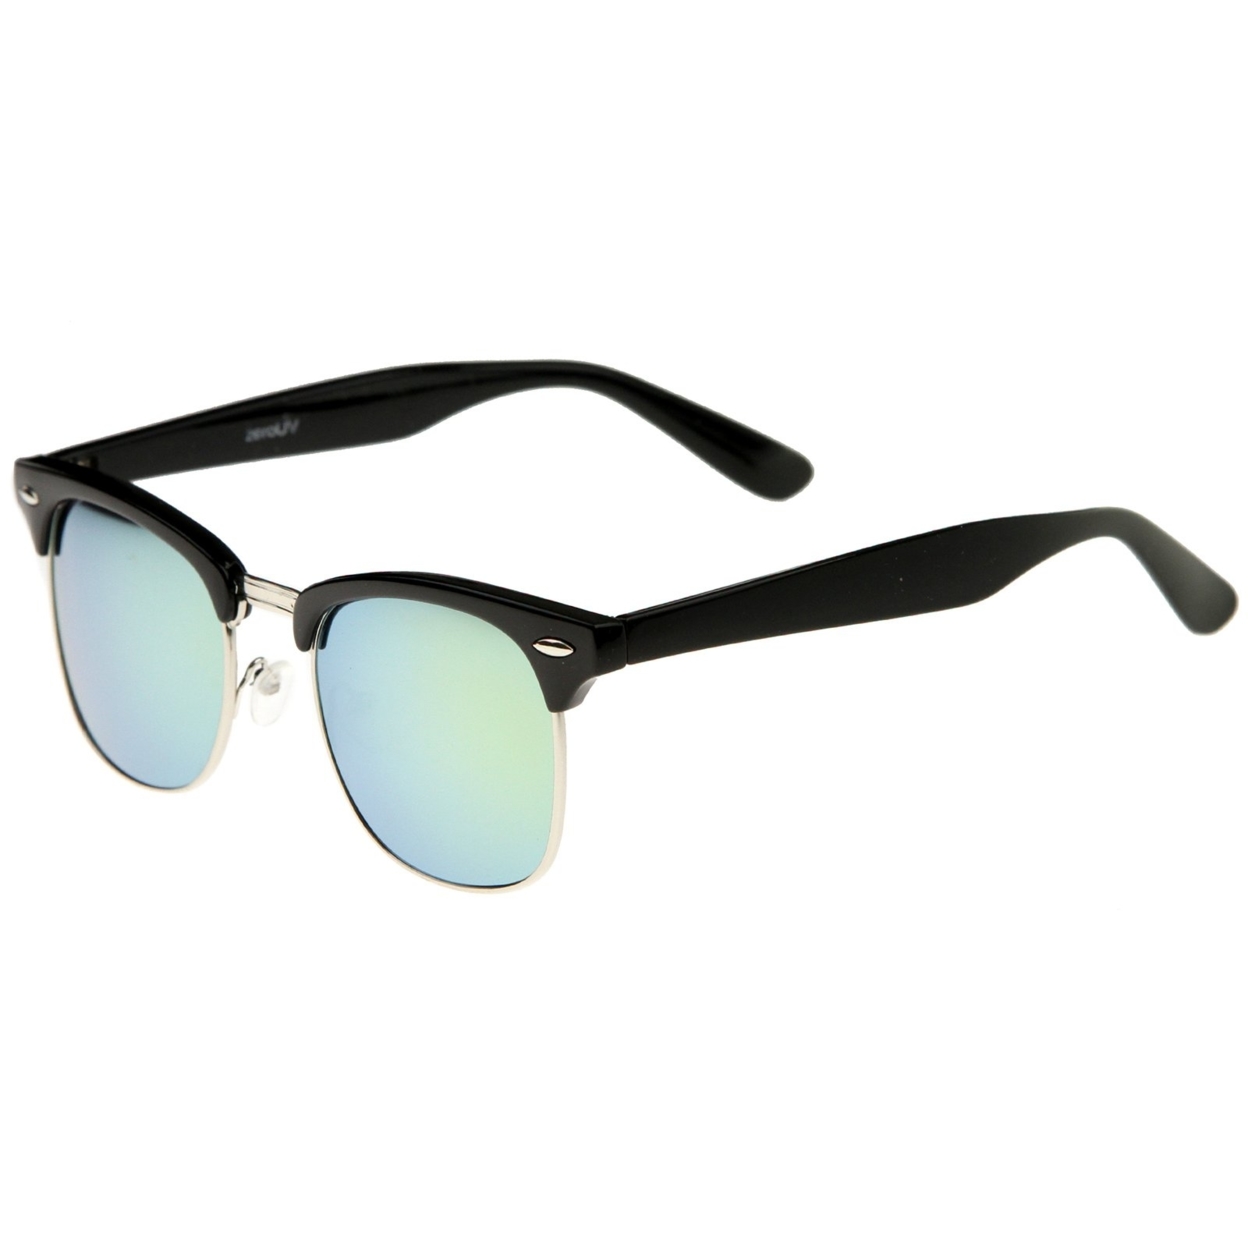 Premium Half Frame Colored Mirror Lens Horn Rimmed Sunglasses 50mm - Black-Gold / Blue Mirror